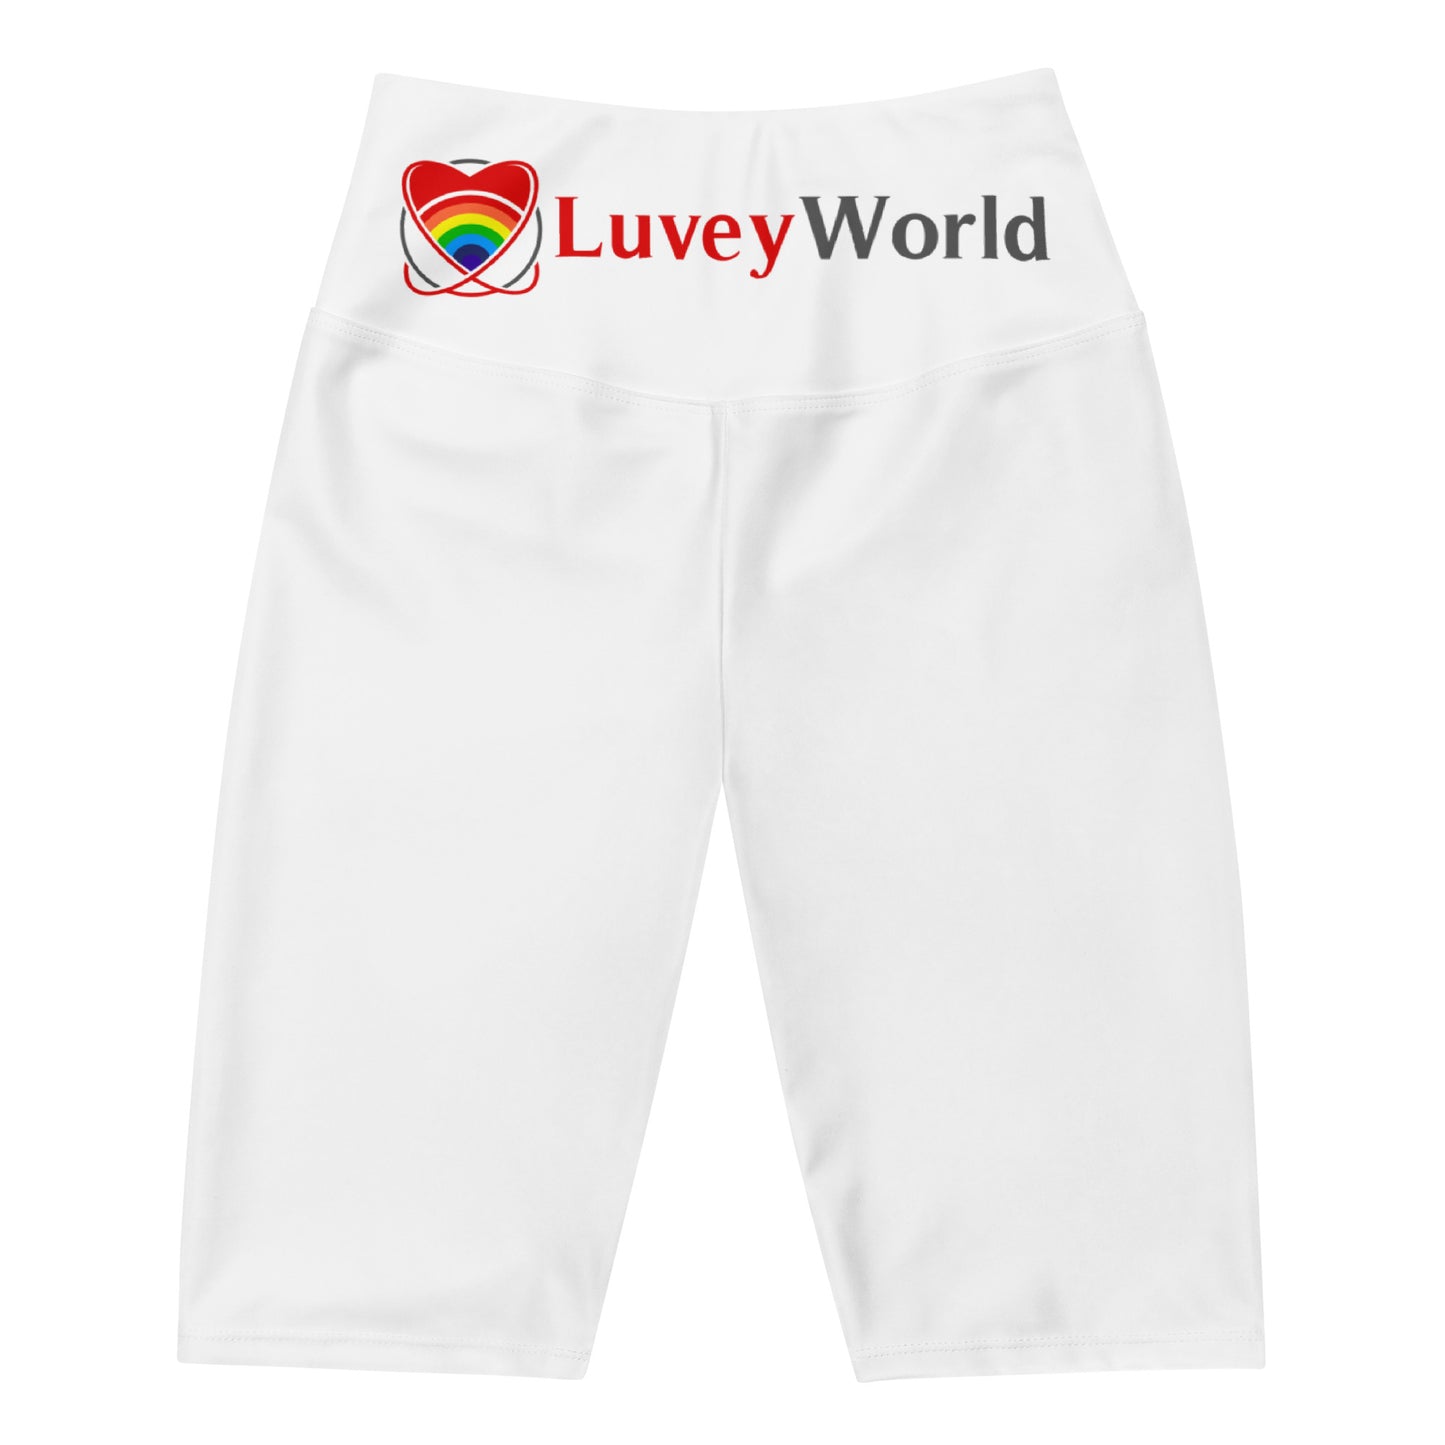 LuveyWorld waist logo Biker Shorts